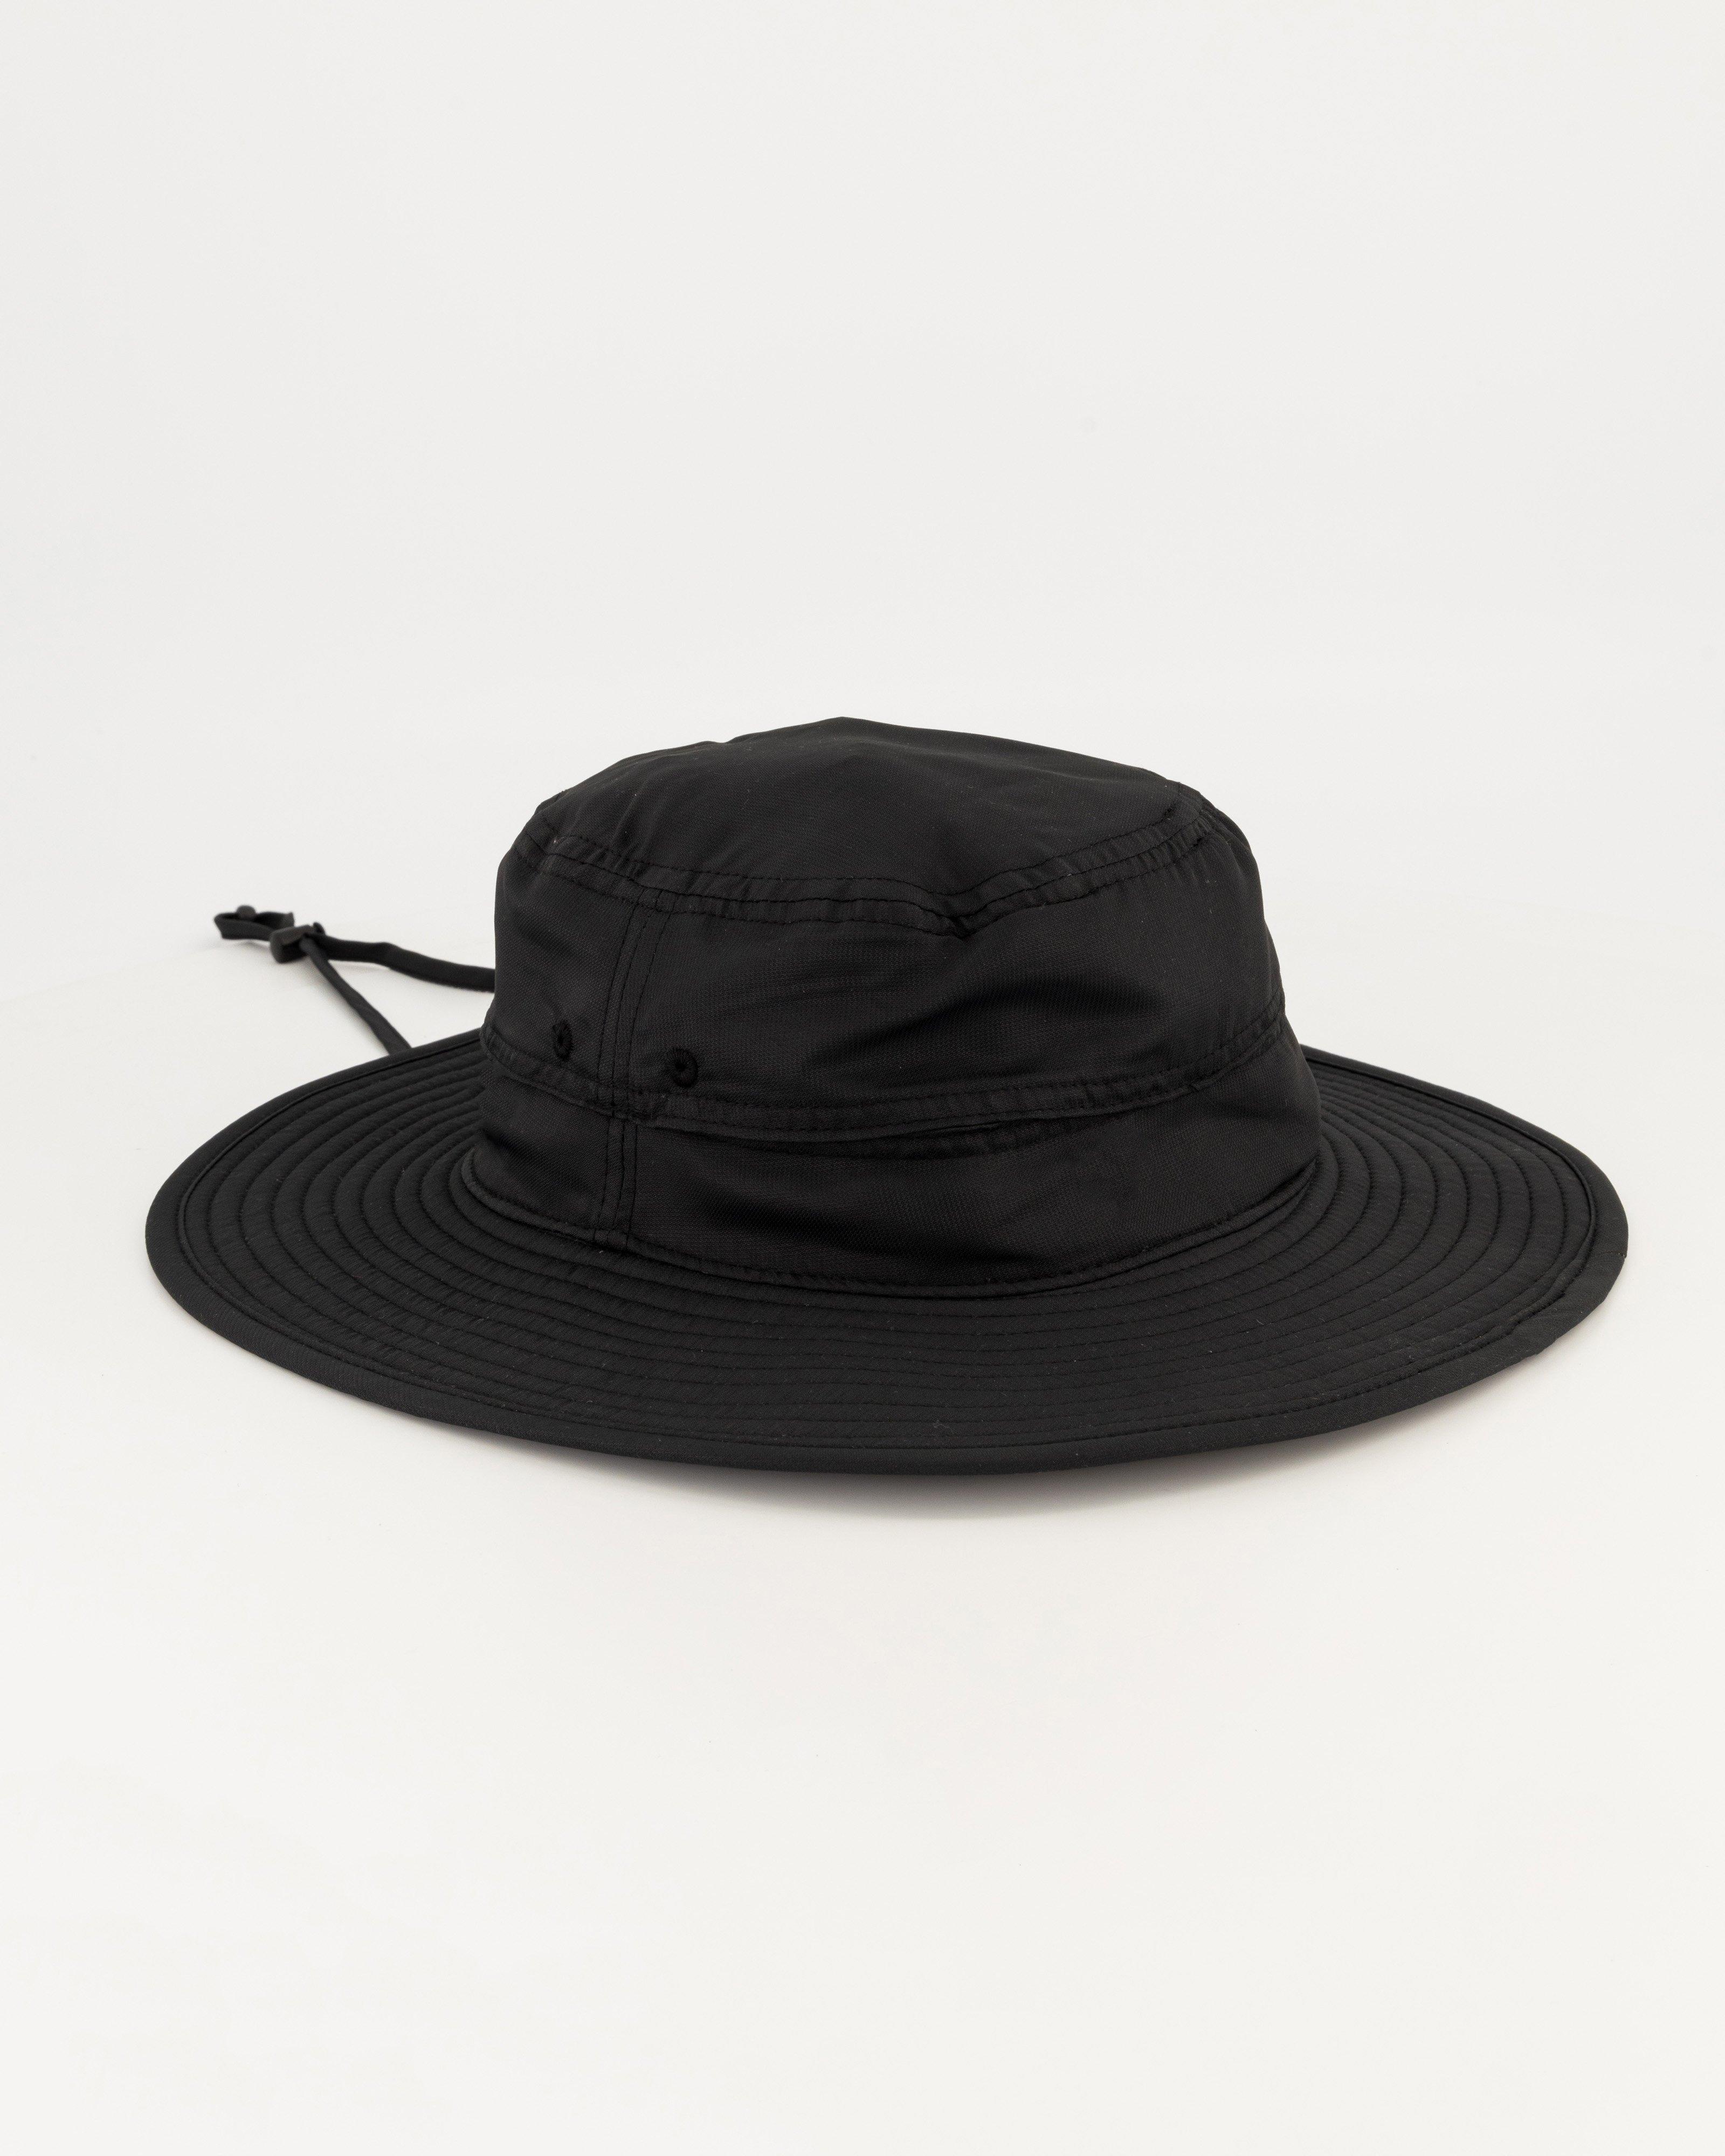 K-Way Explorer Talus Floppy Hat -  Black